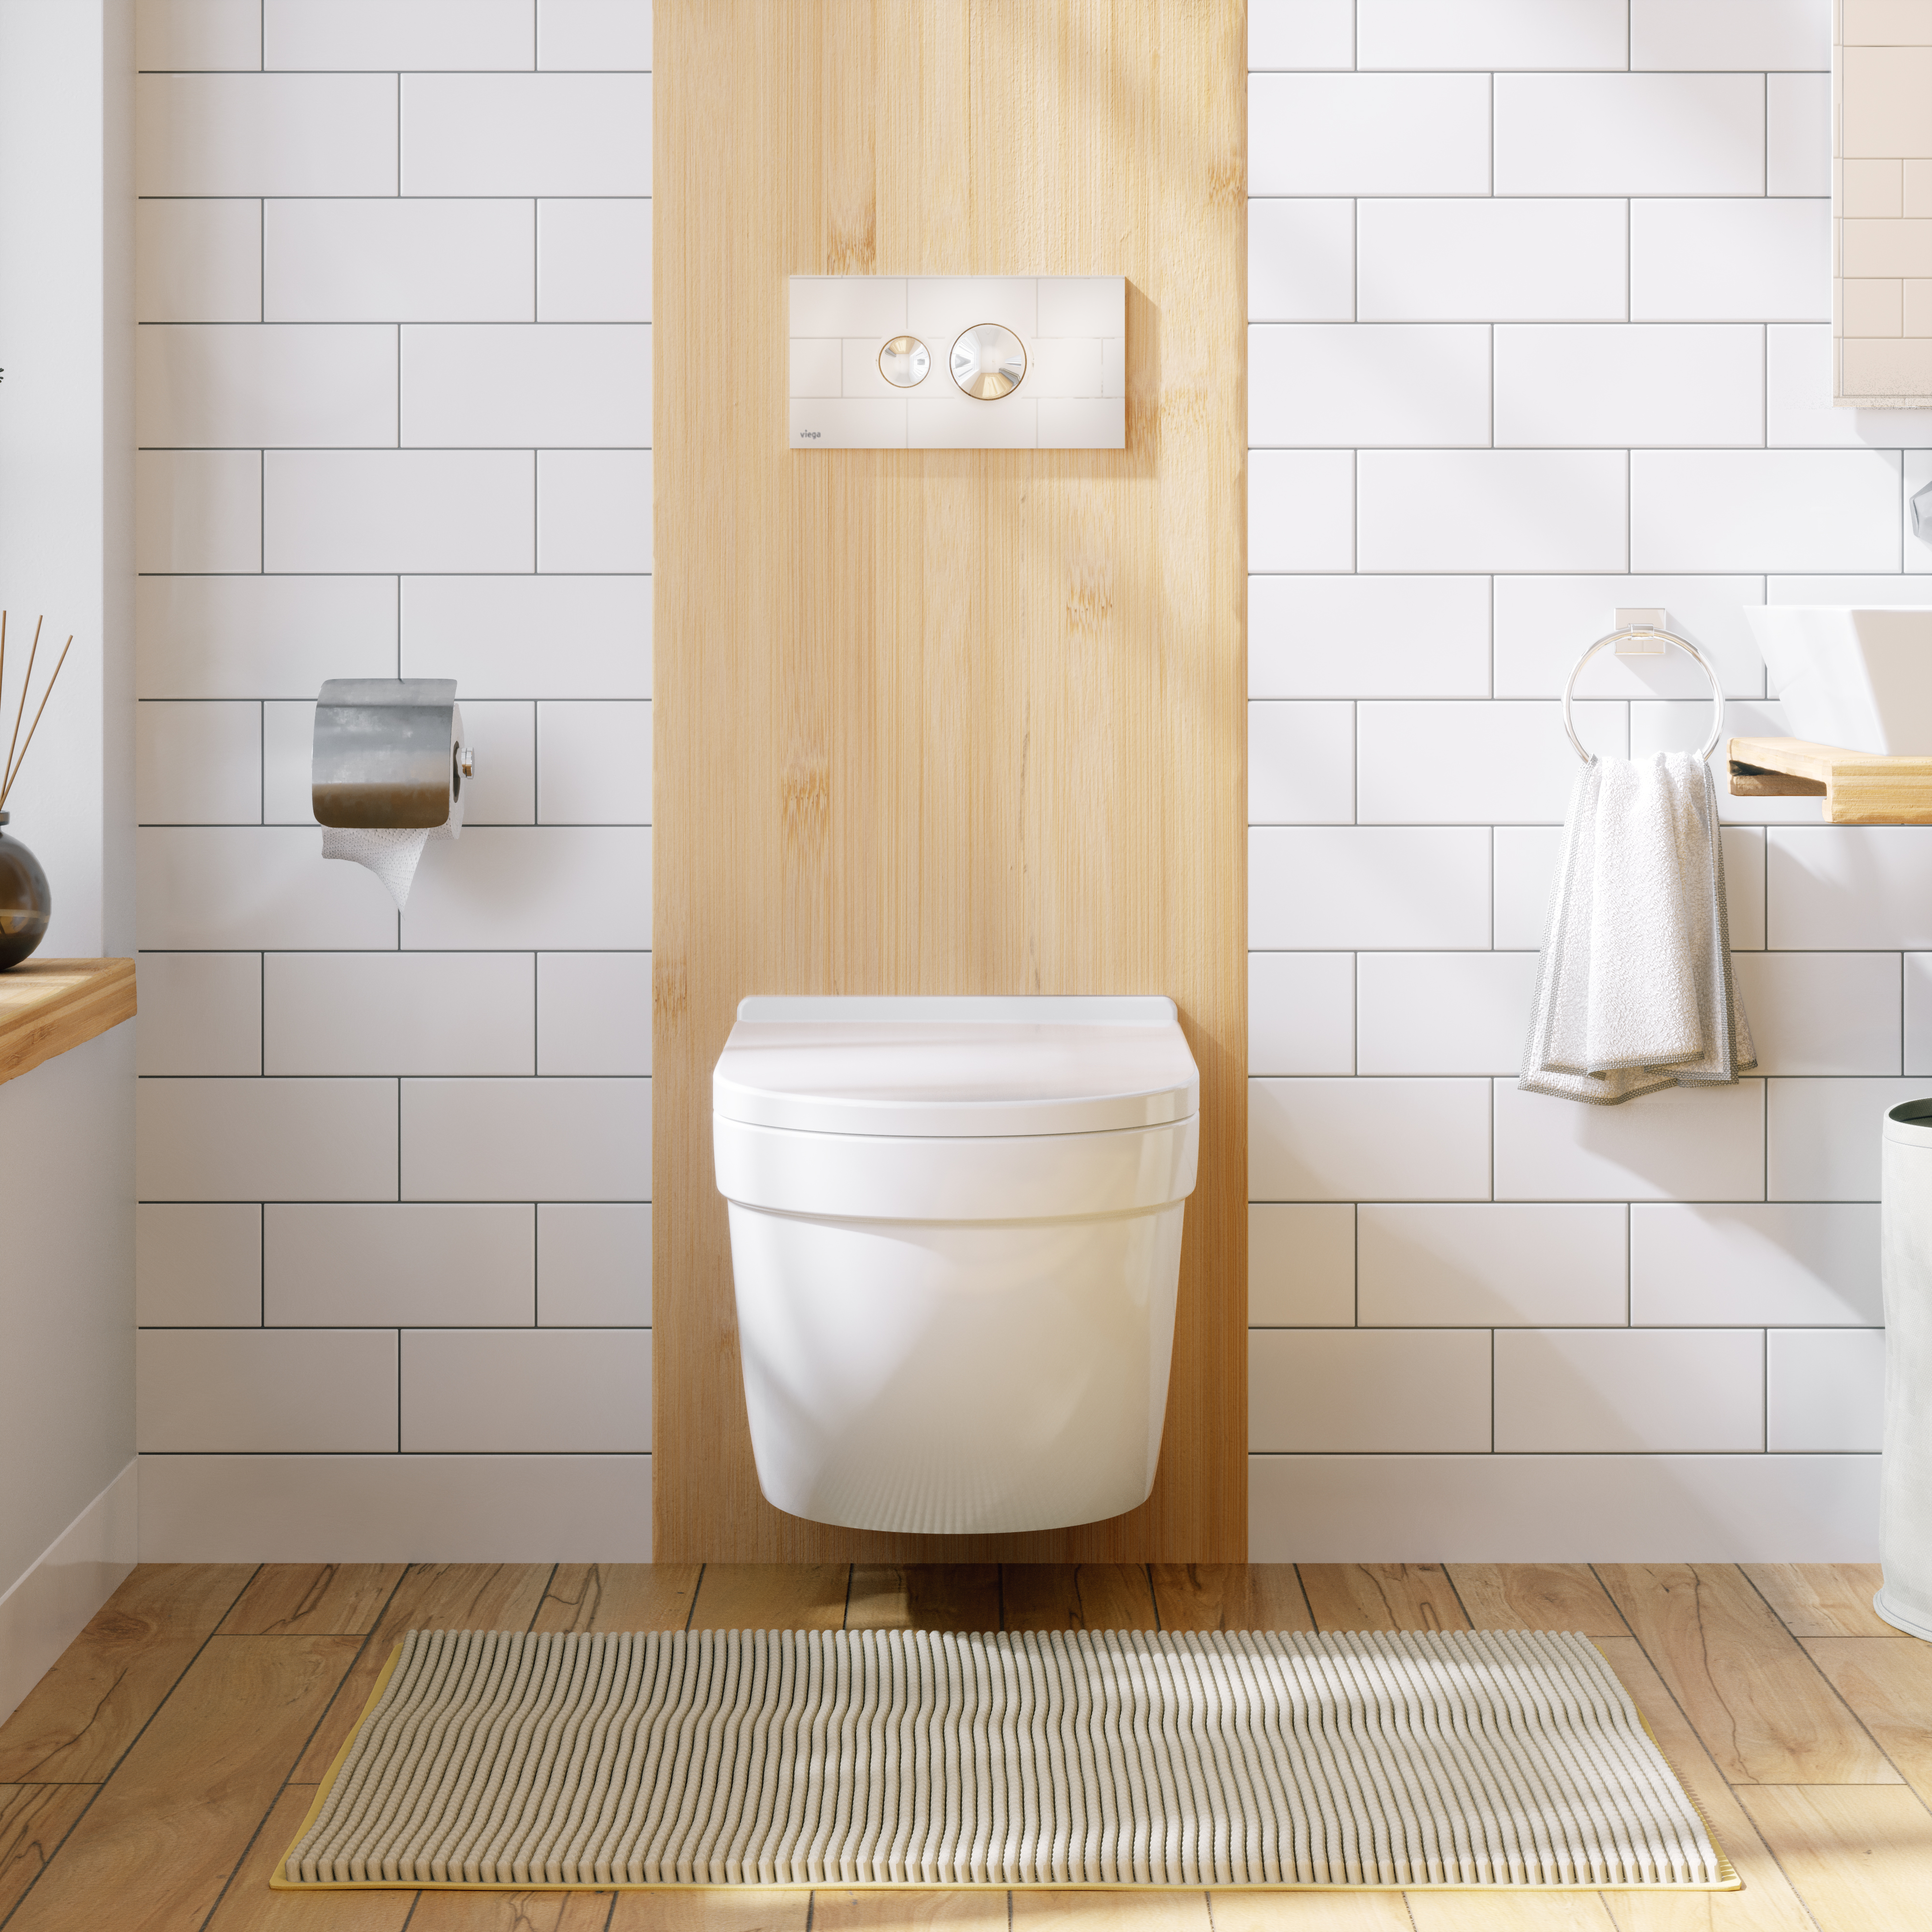 https://www.residentialproductsonline.com/sites/rpo/files/Icera-Wall-Hung-Toilet-Karo.jpg